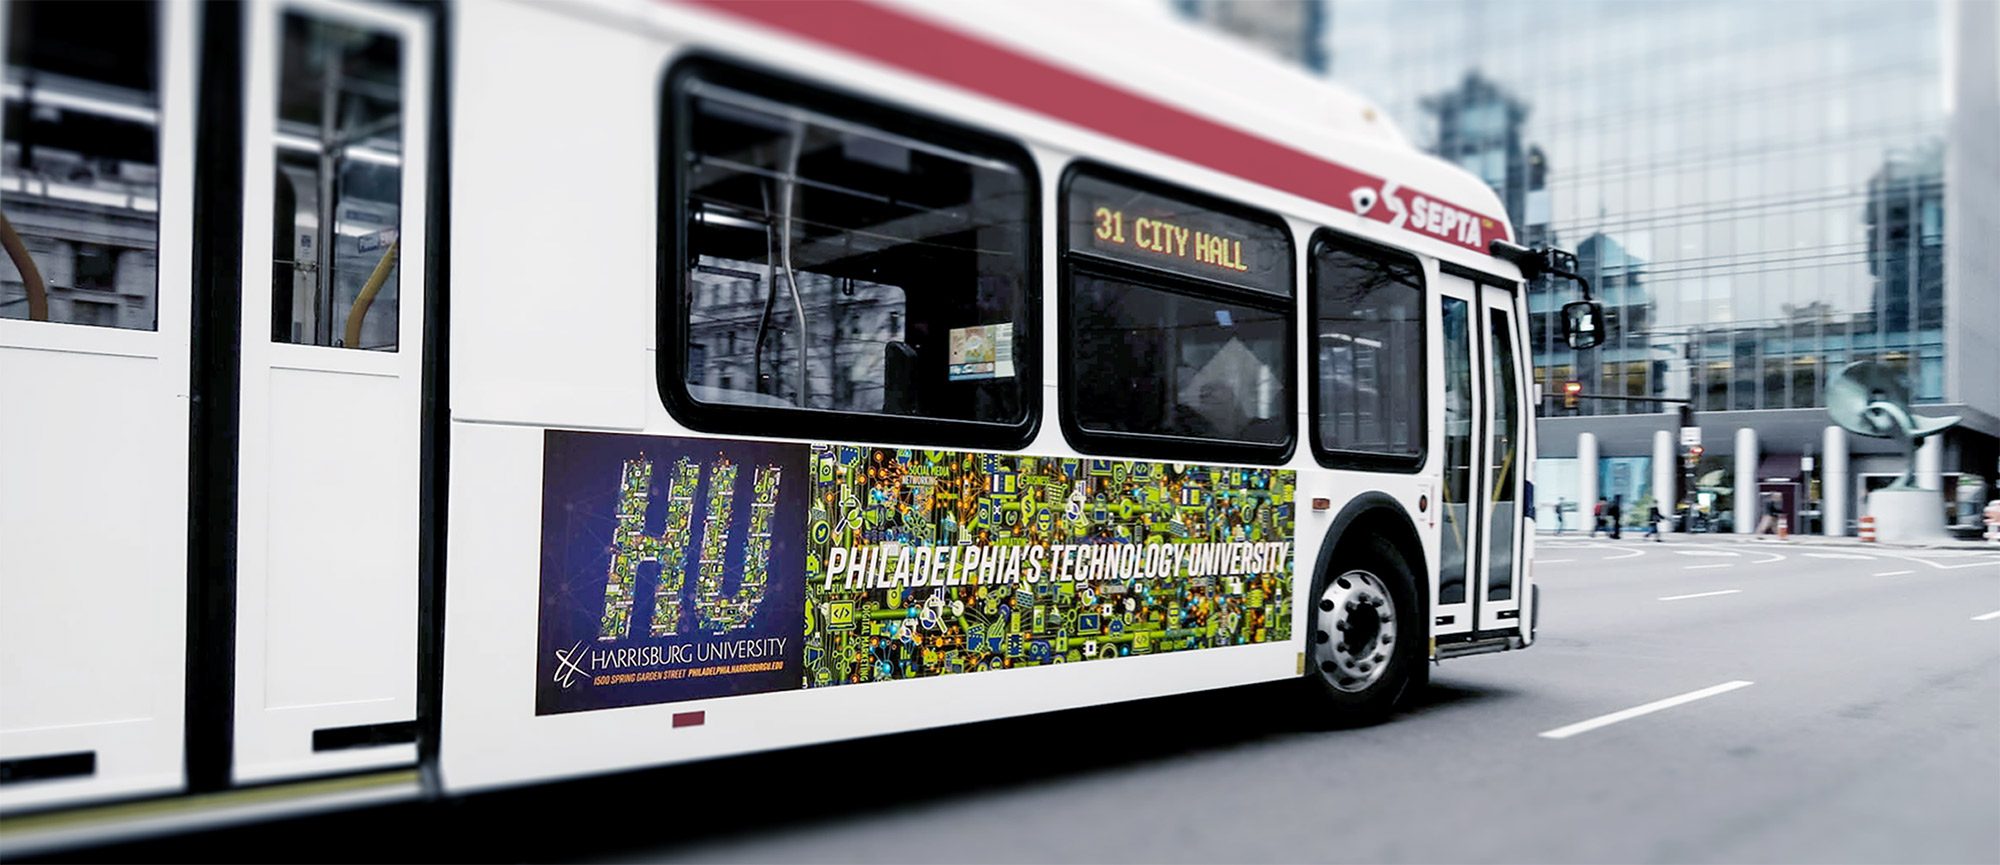 Harrisburg University bus advertisement